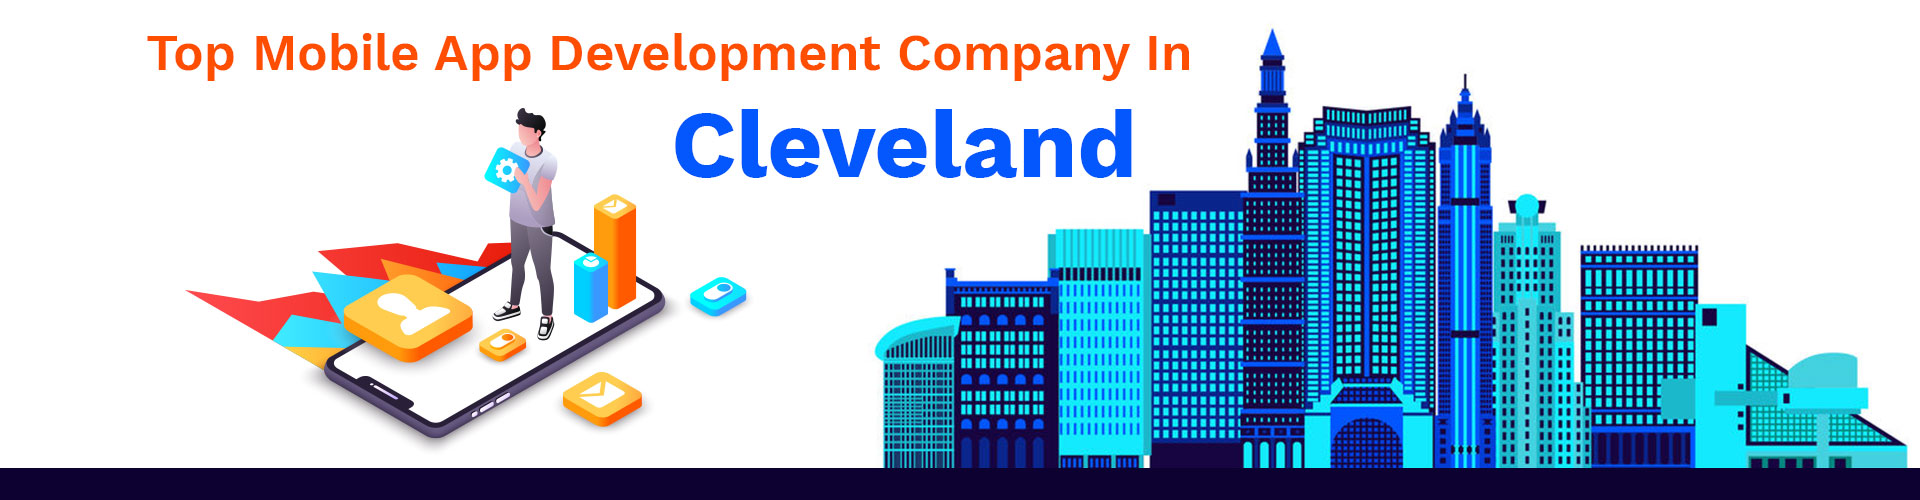 mobile app development company cleveland